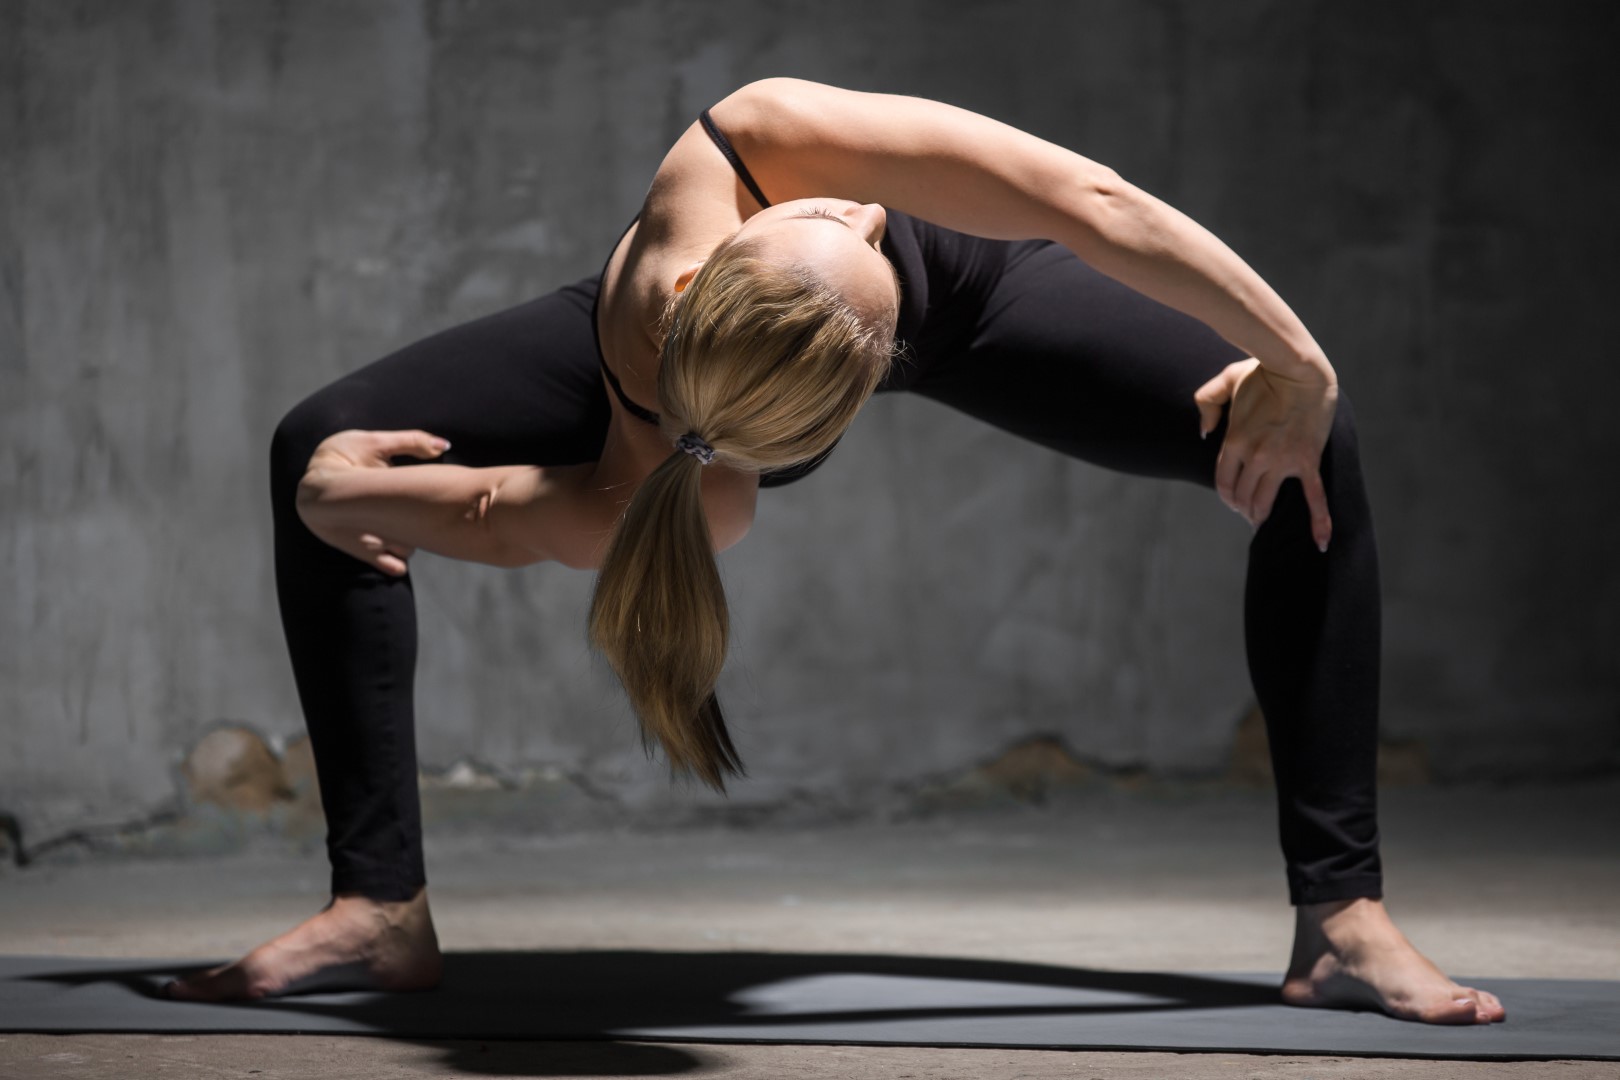 A woman demonstrates the yoga sumo squat twist